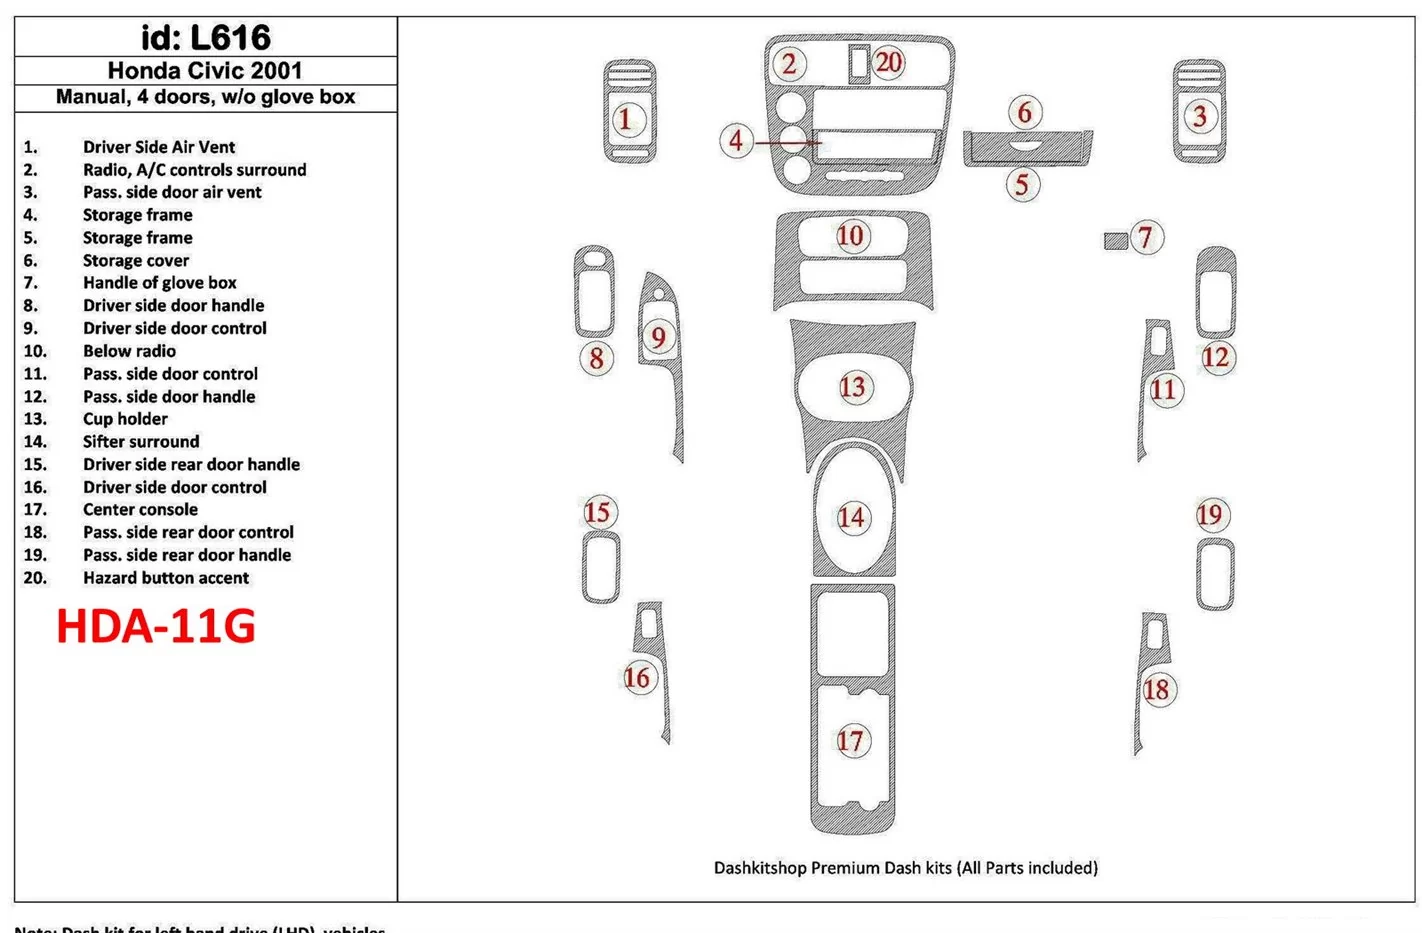 Honda Civic 2001-2001 Manual Gearbox, 4 Doors, Without glowe-box, 20 Parts set Interior BD Dash Trim Kit